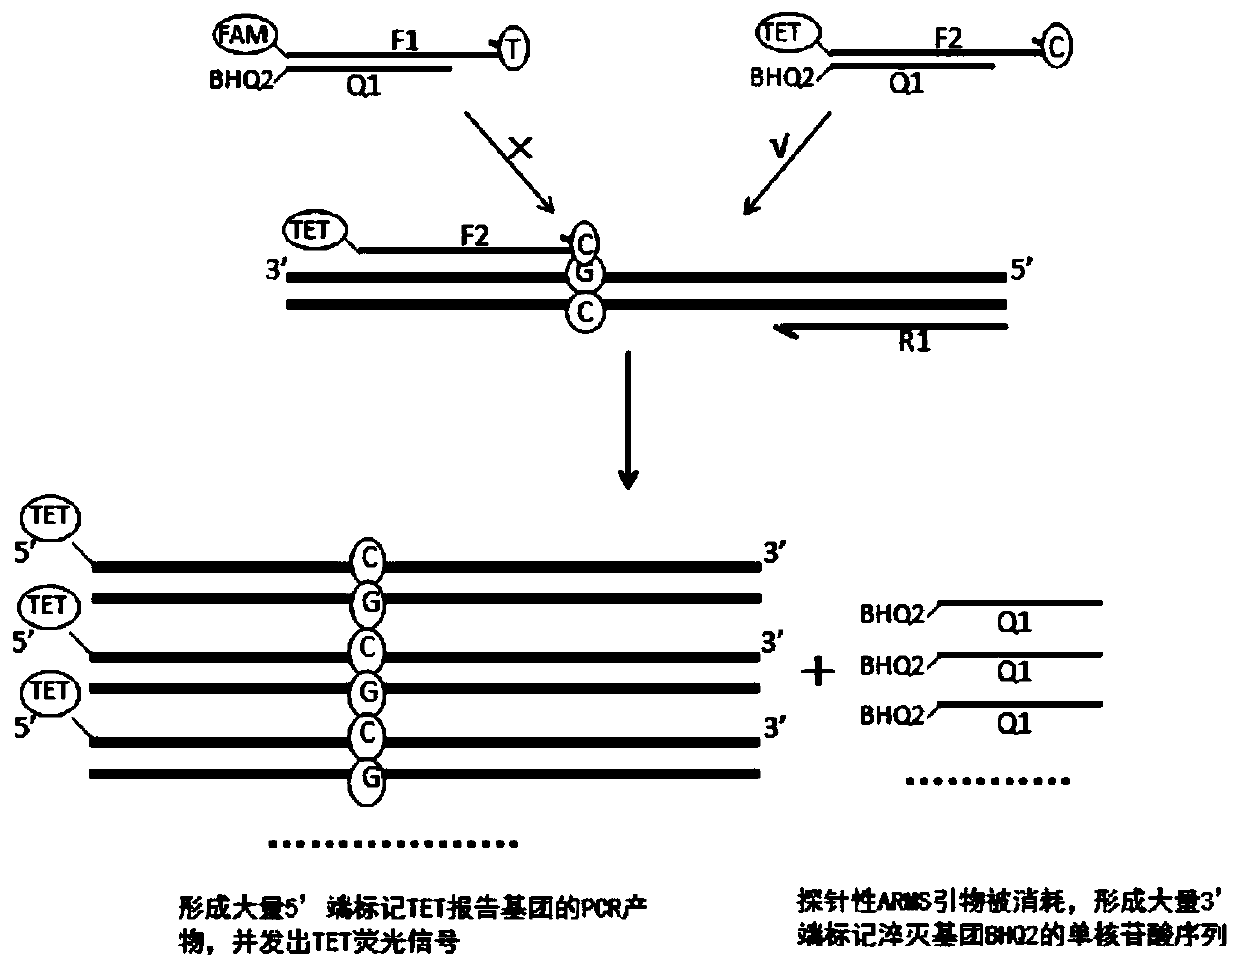 Primer set, method and kit for detecting slco1b1 and apoe gene polymorphisms based on shared primer probes